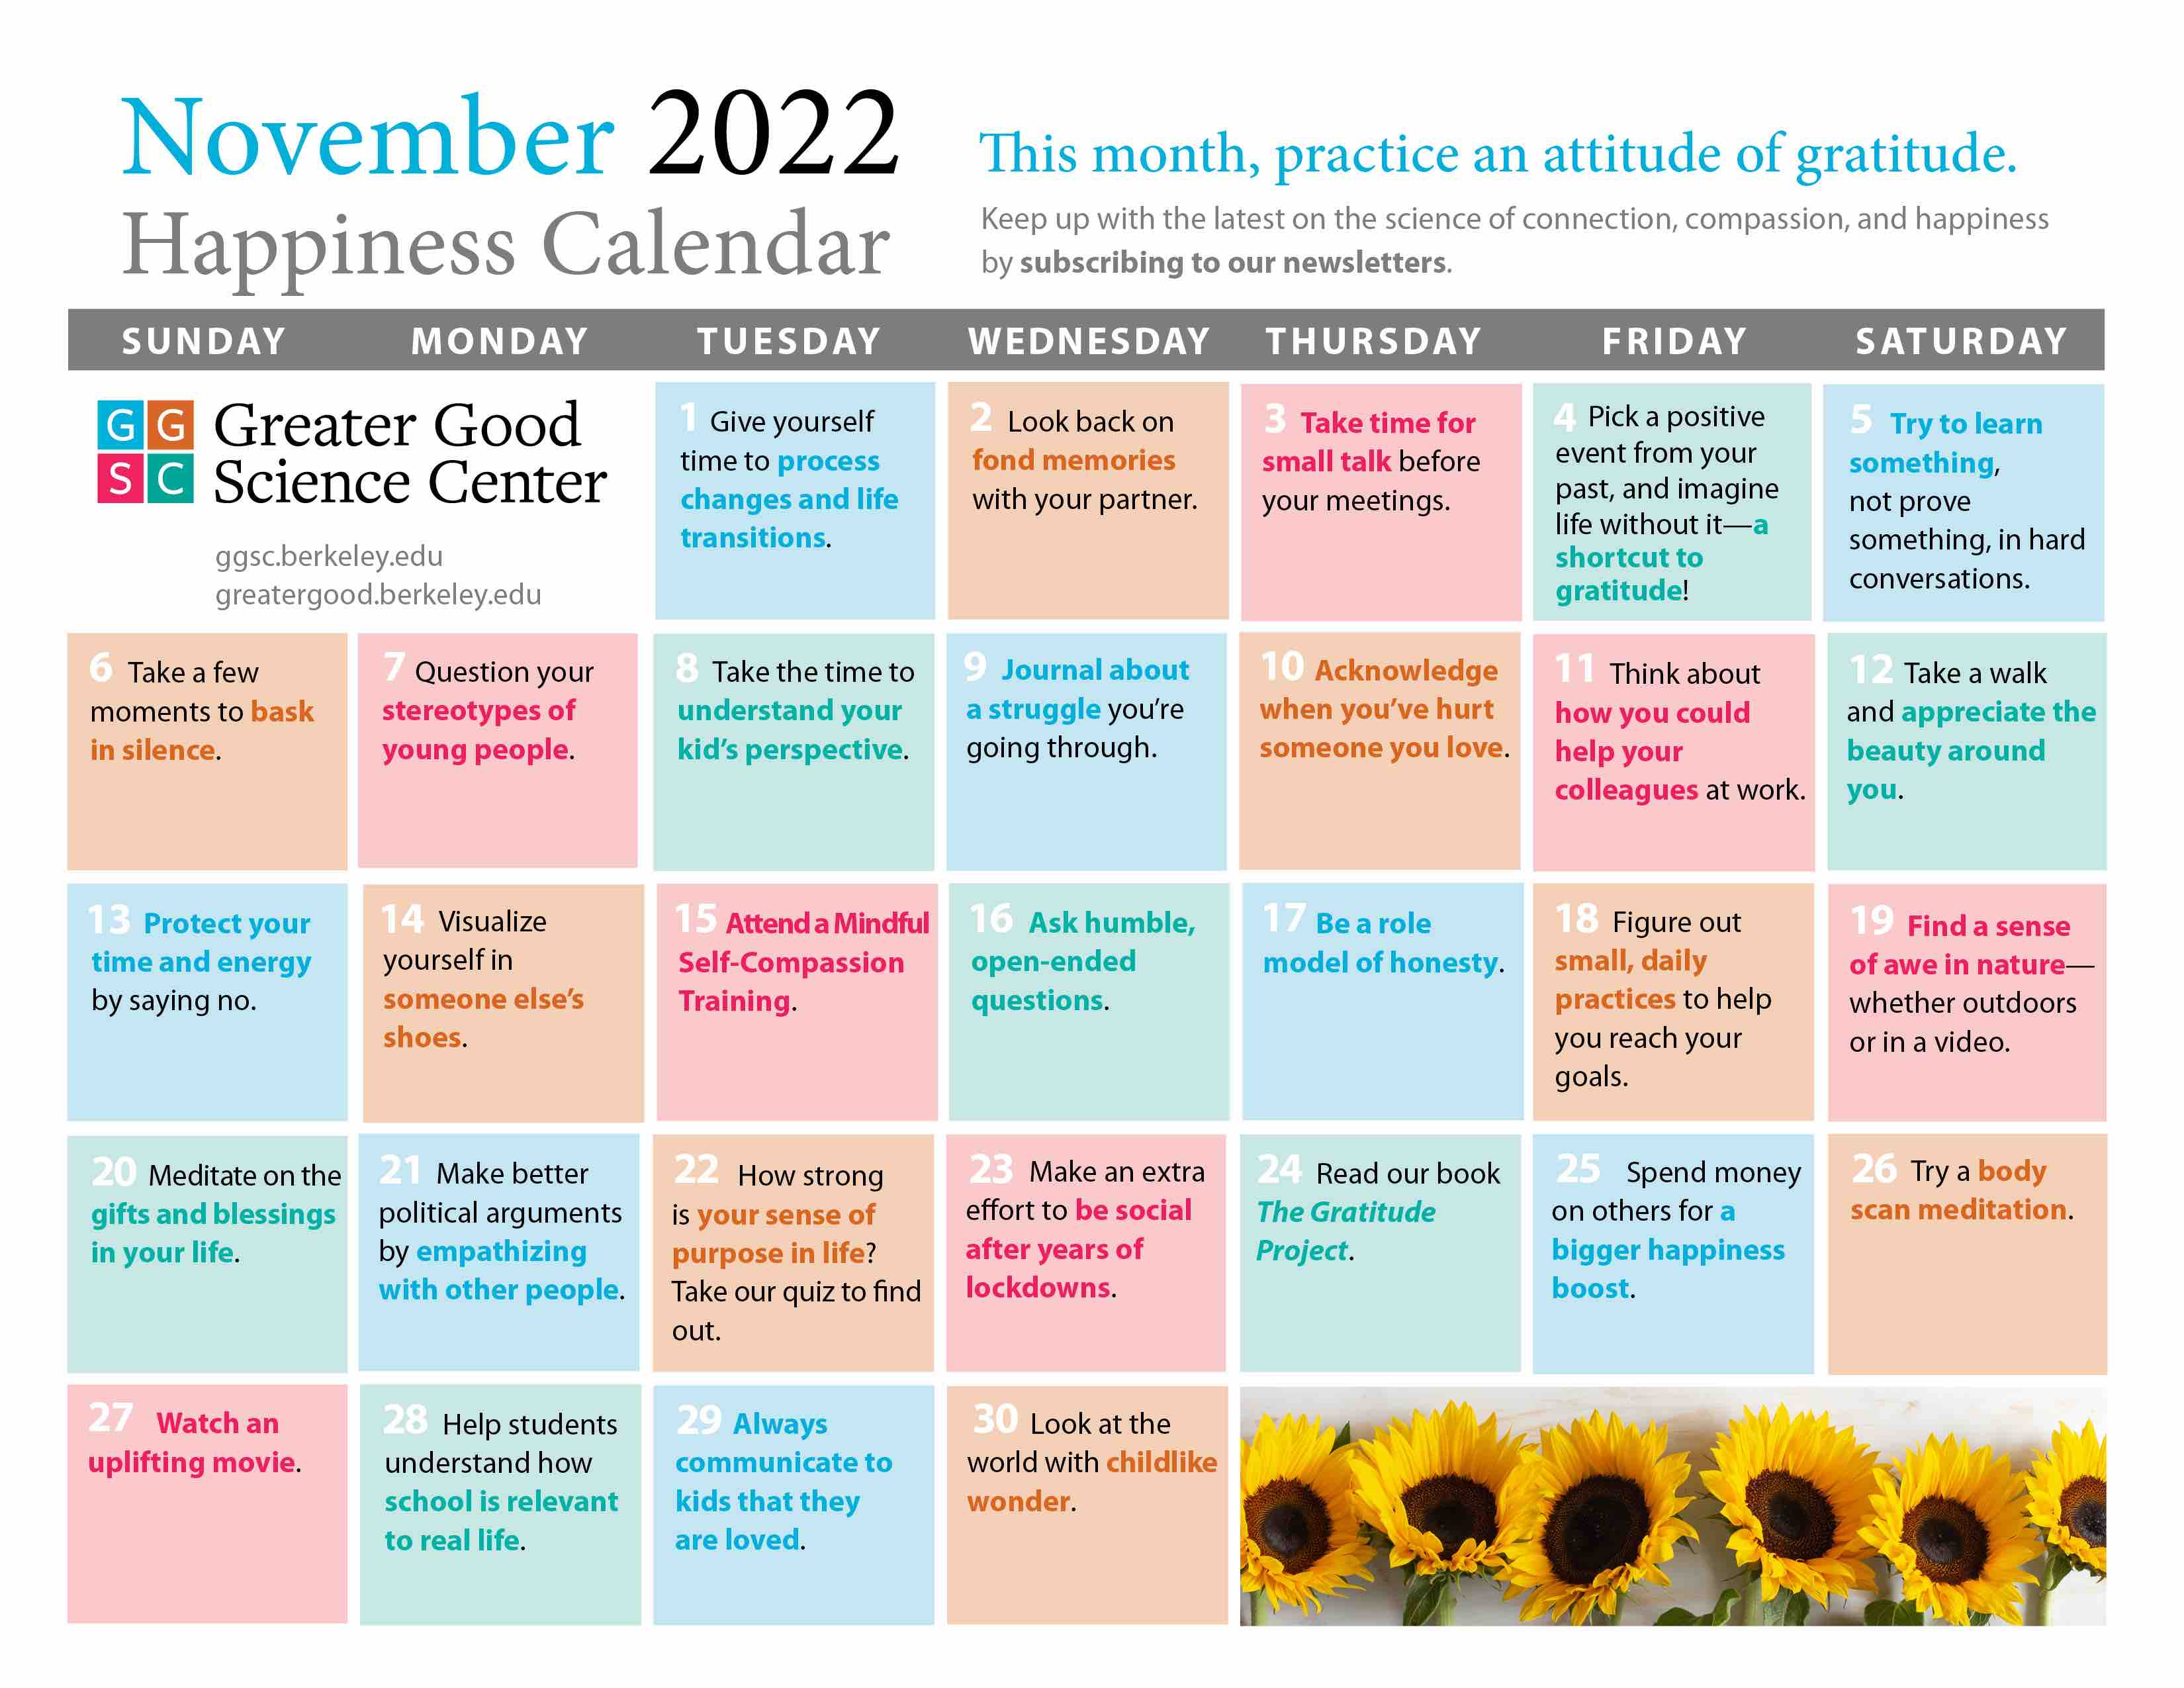 November 2022 happiness calendar